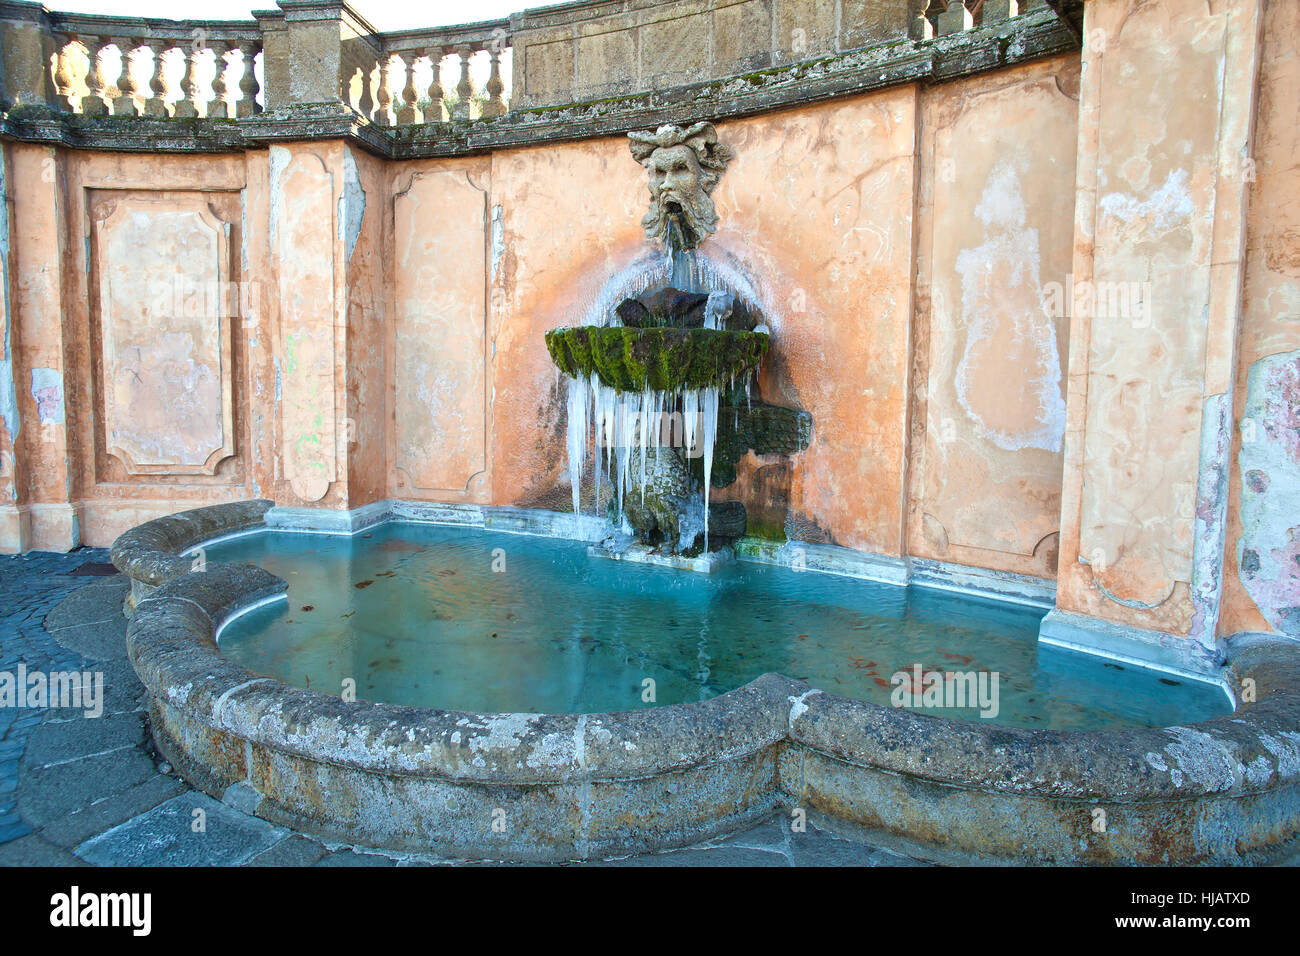 Frozen fountain in Villa Torlonia Park - Frascati, Rome, Italy. Stock Photo